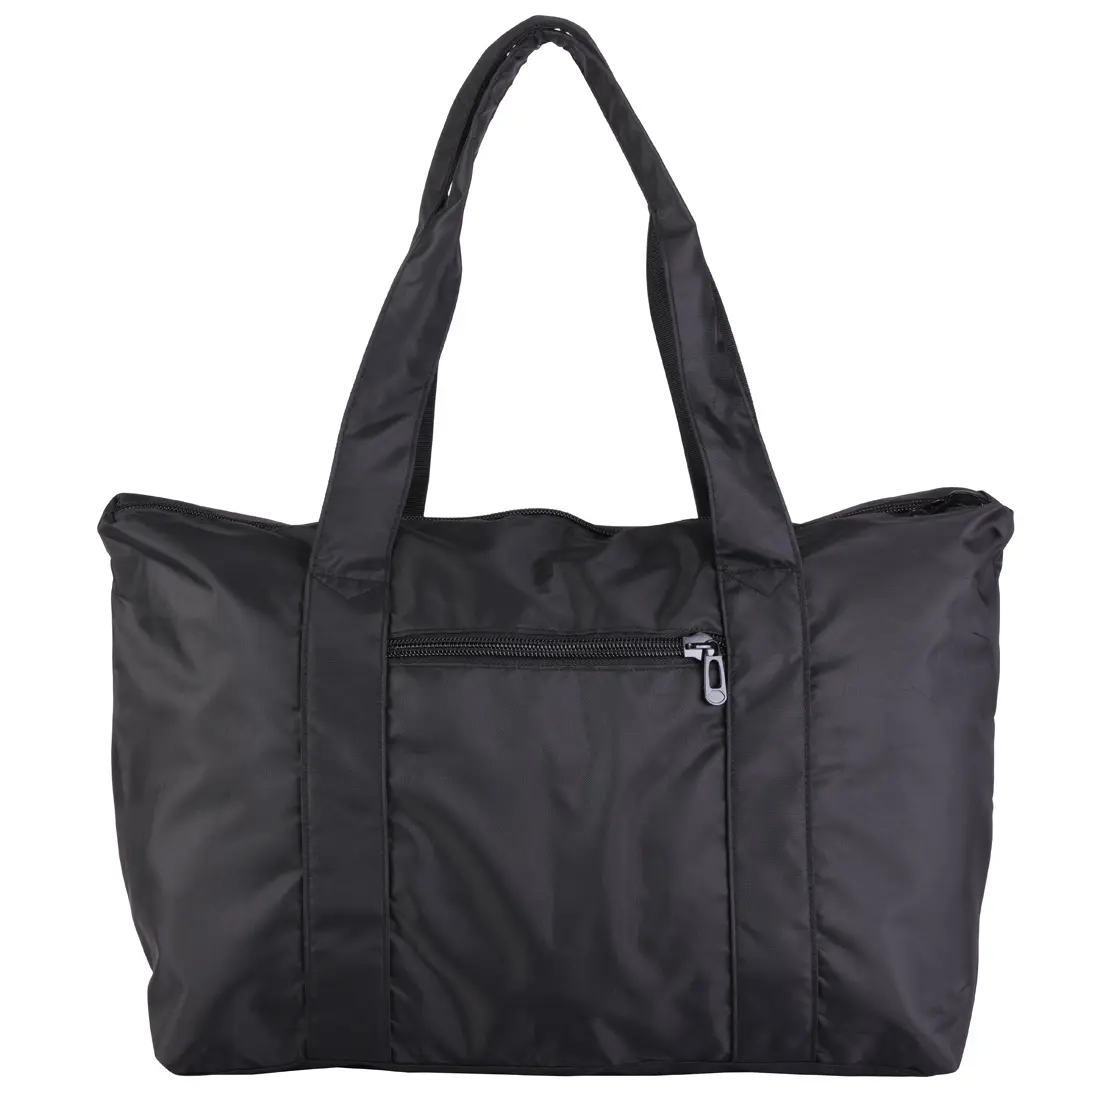 Duffel Bag Mens Travel Duffel Bag For Women Men Waterproof Nylon Duffle Tote Bag Lightweight Luggage Bag For Sports Gym Vacation